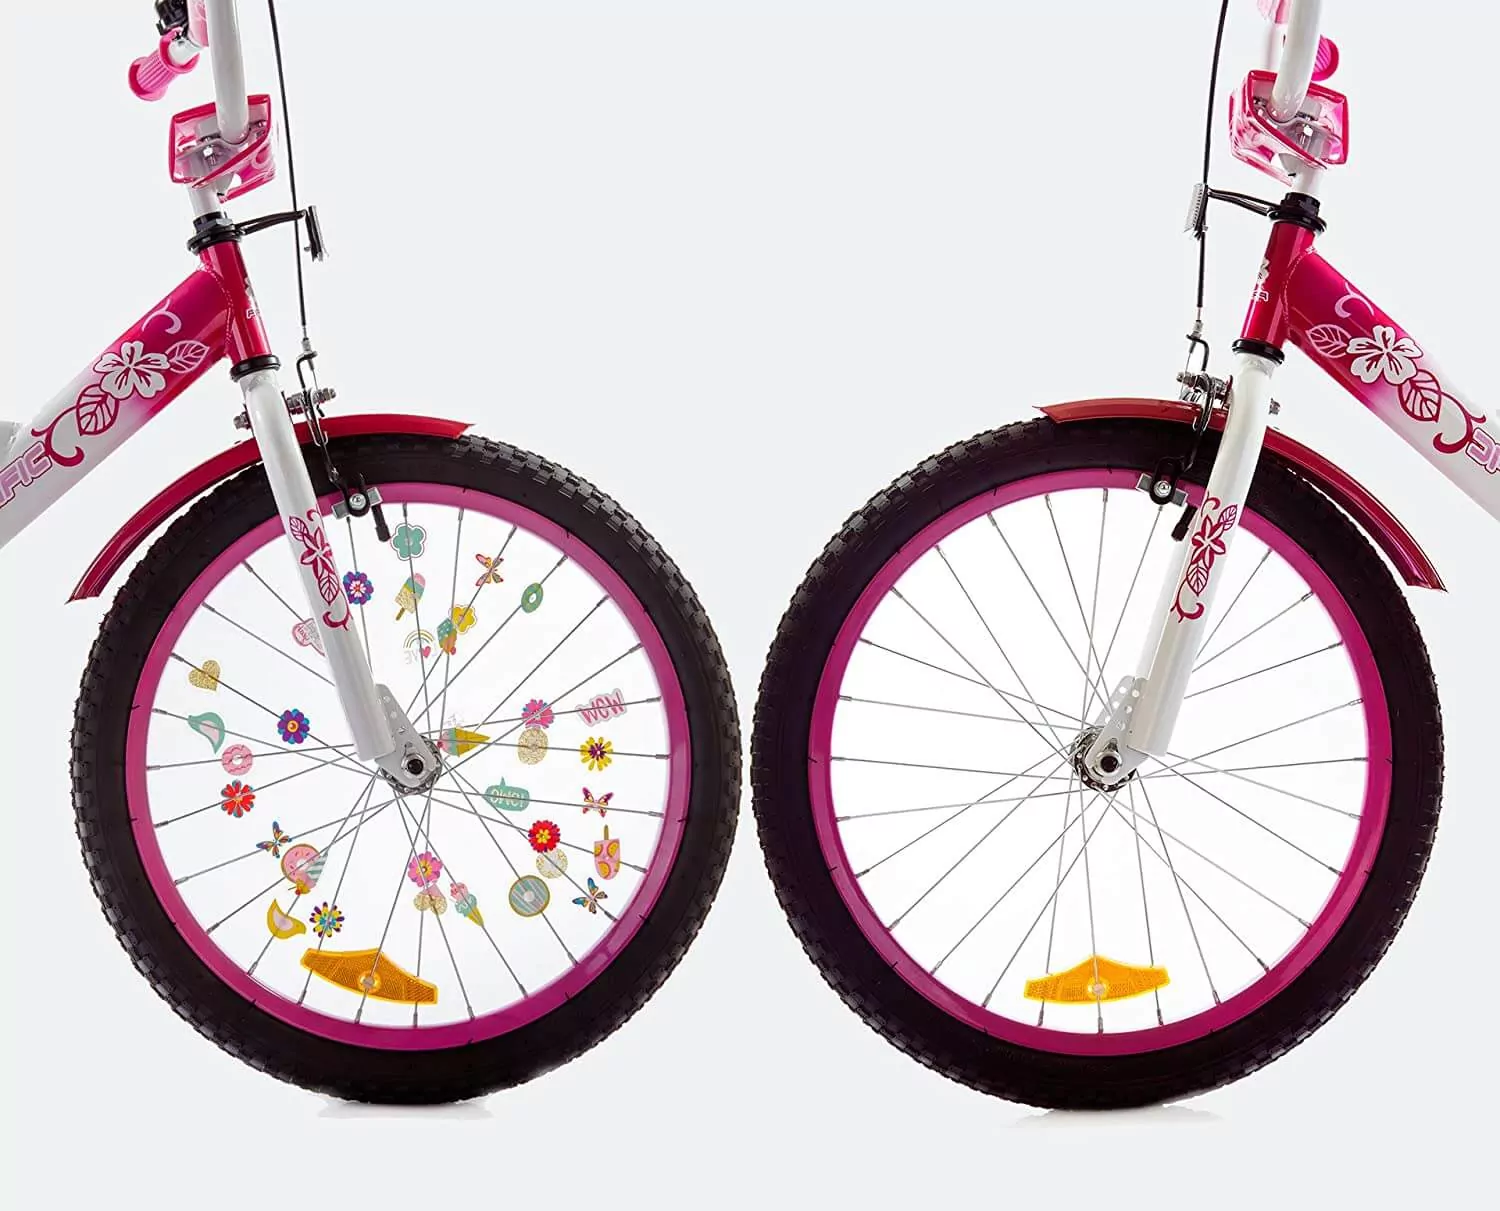 Bike Wheel spokes